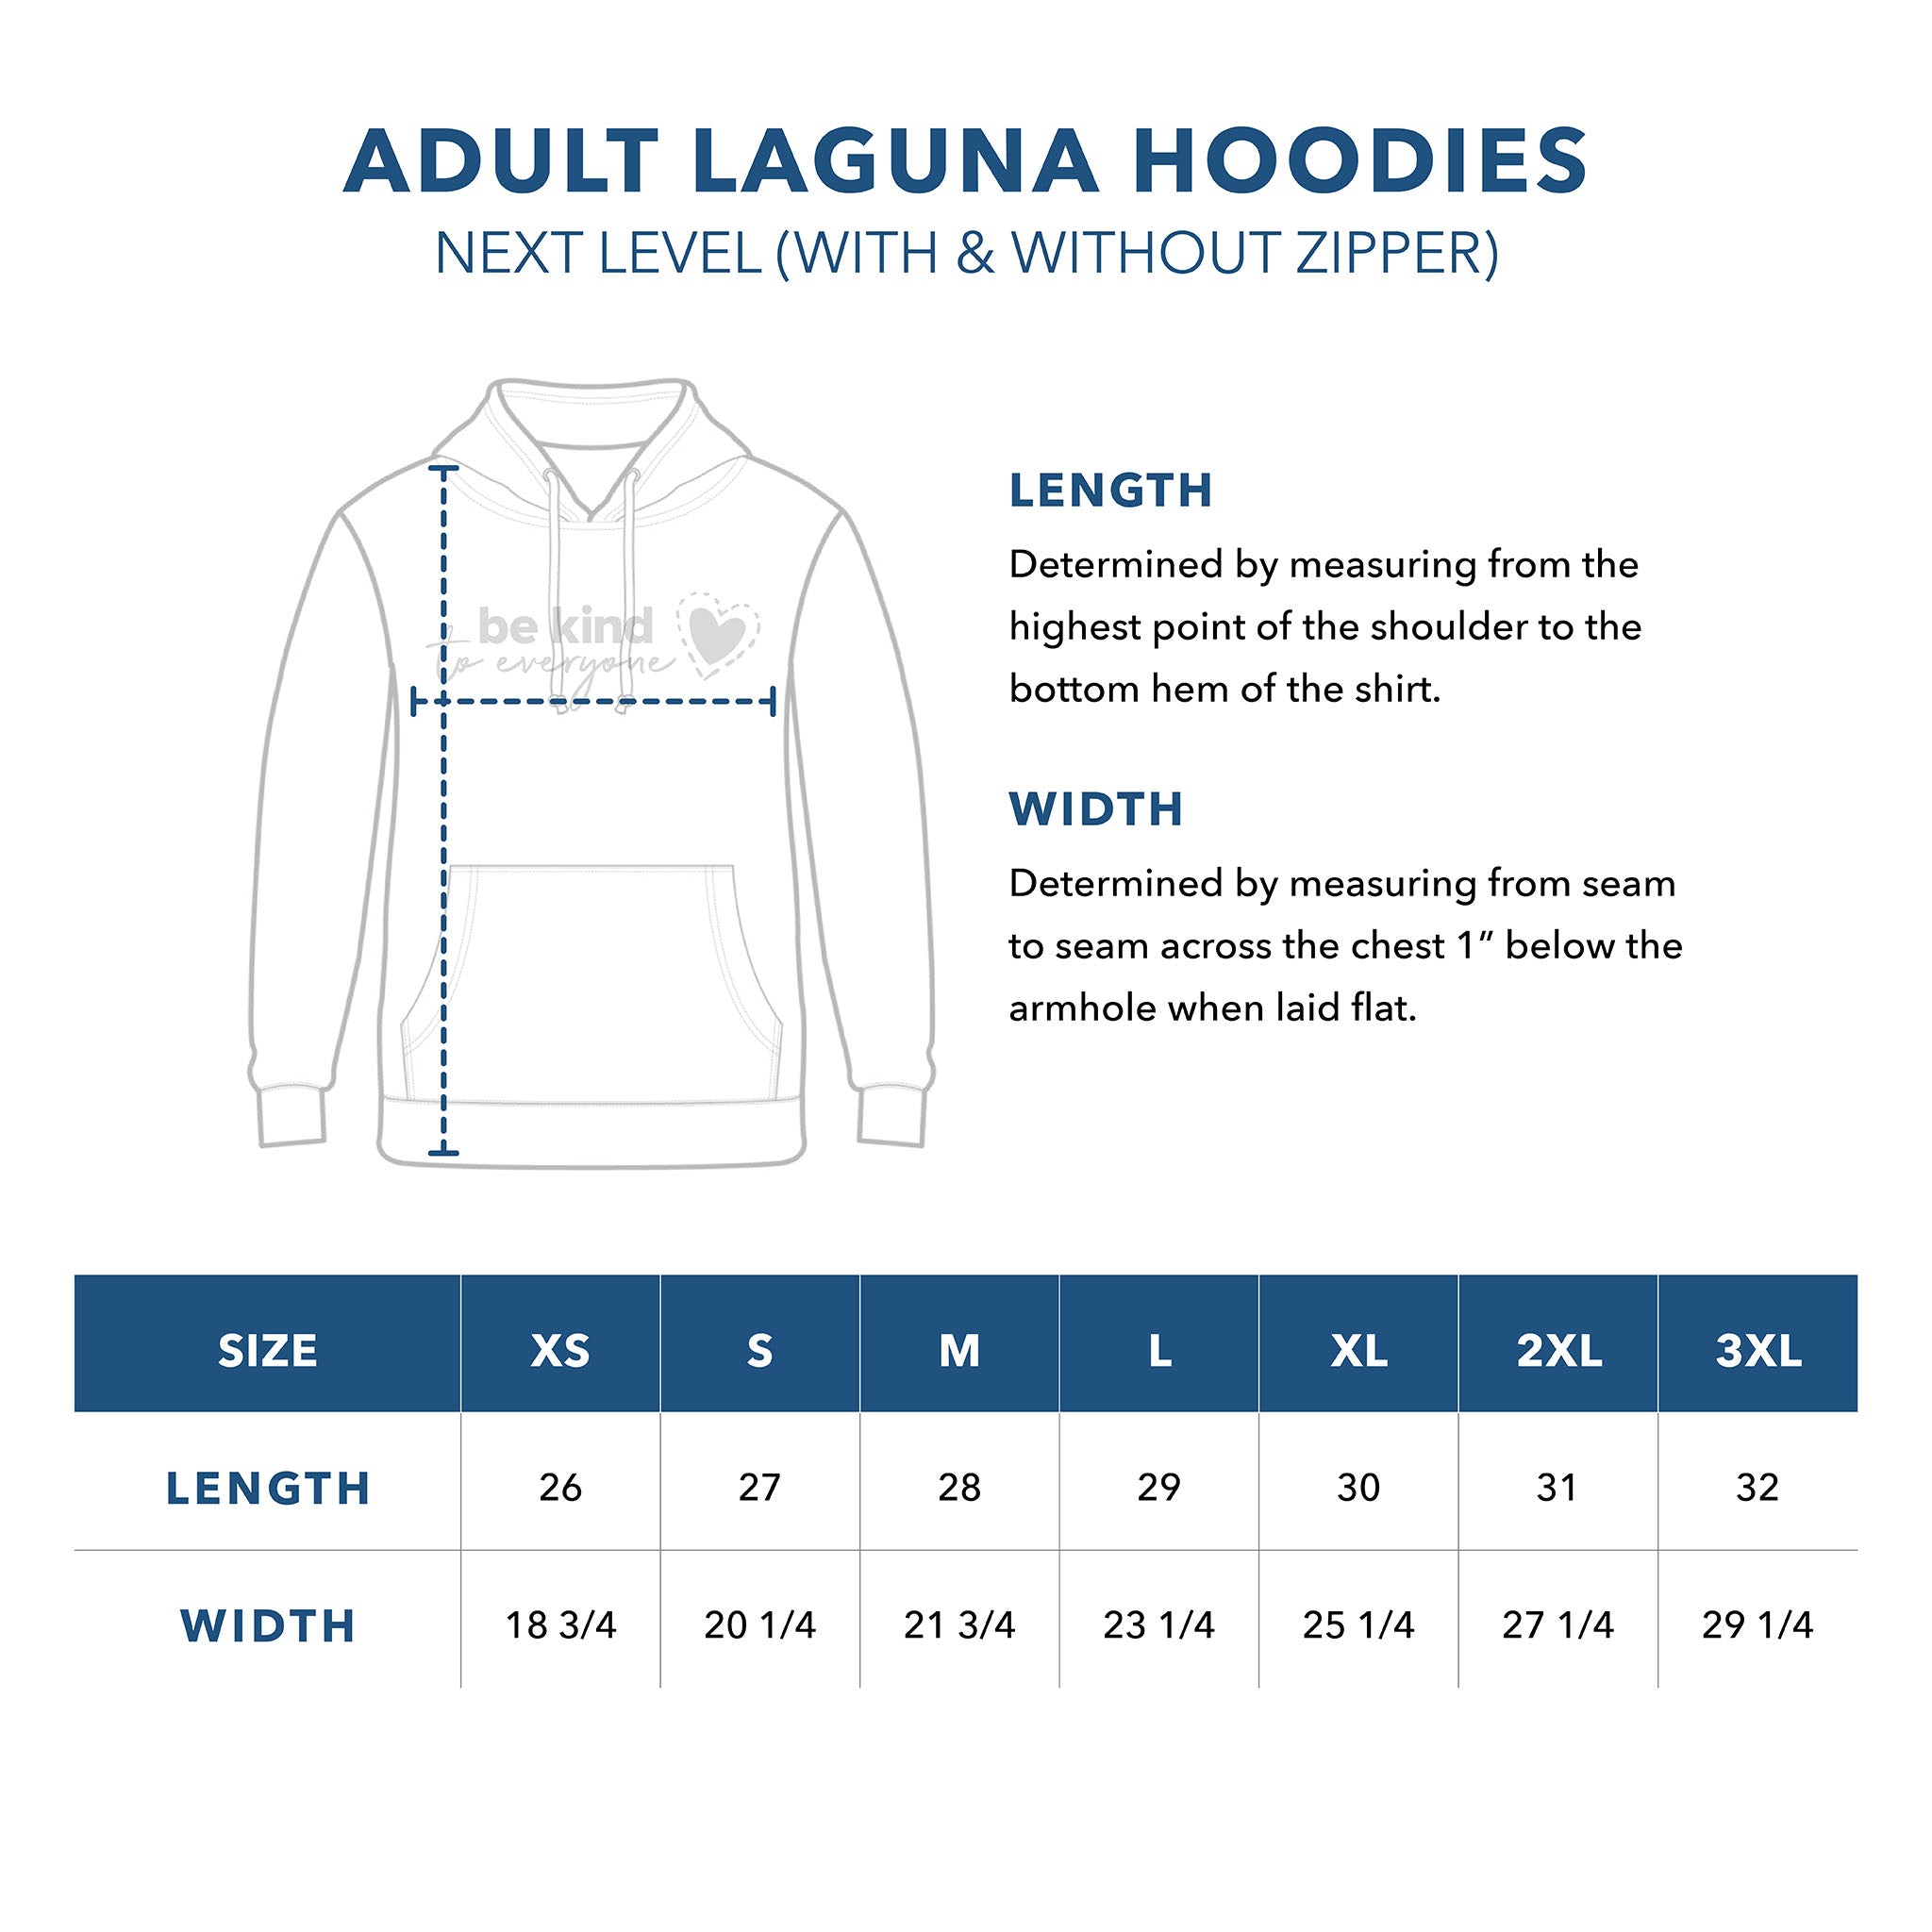 Adult Laguna Hoodie Sizing Guide